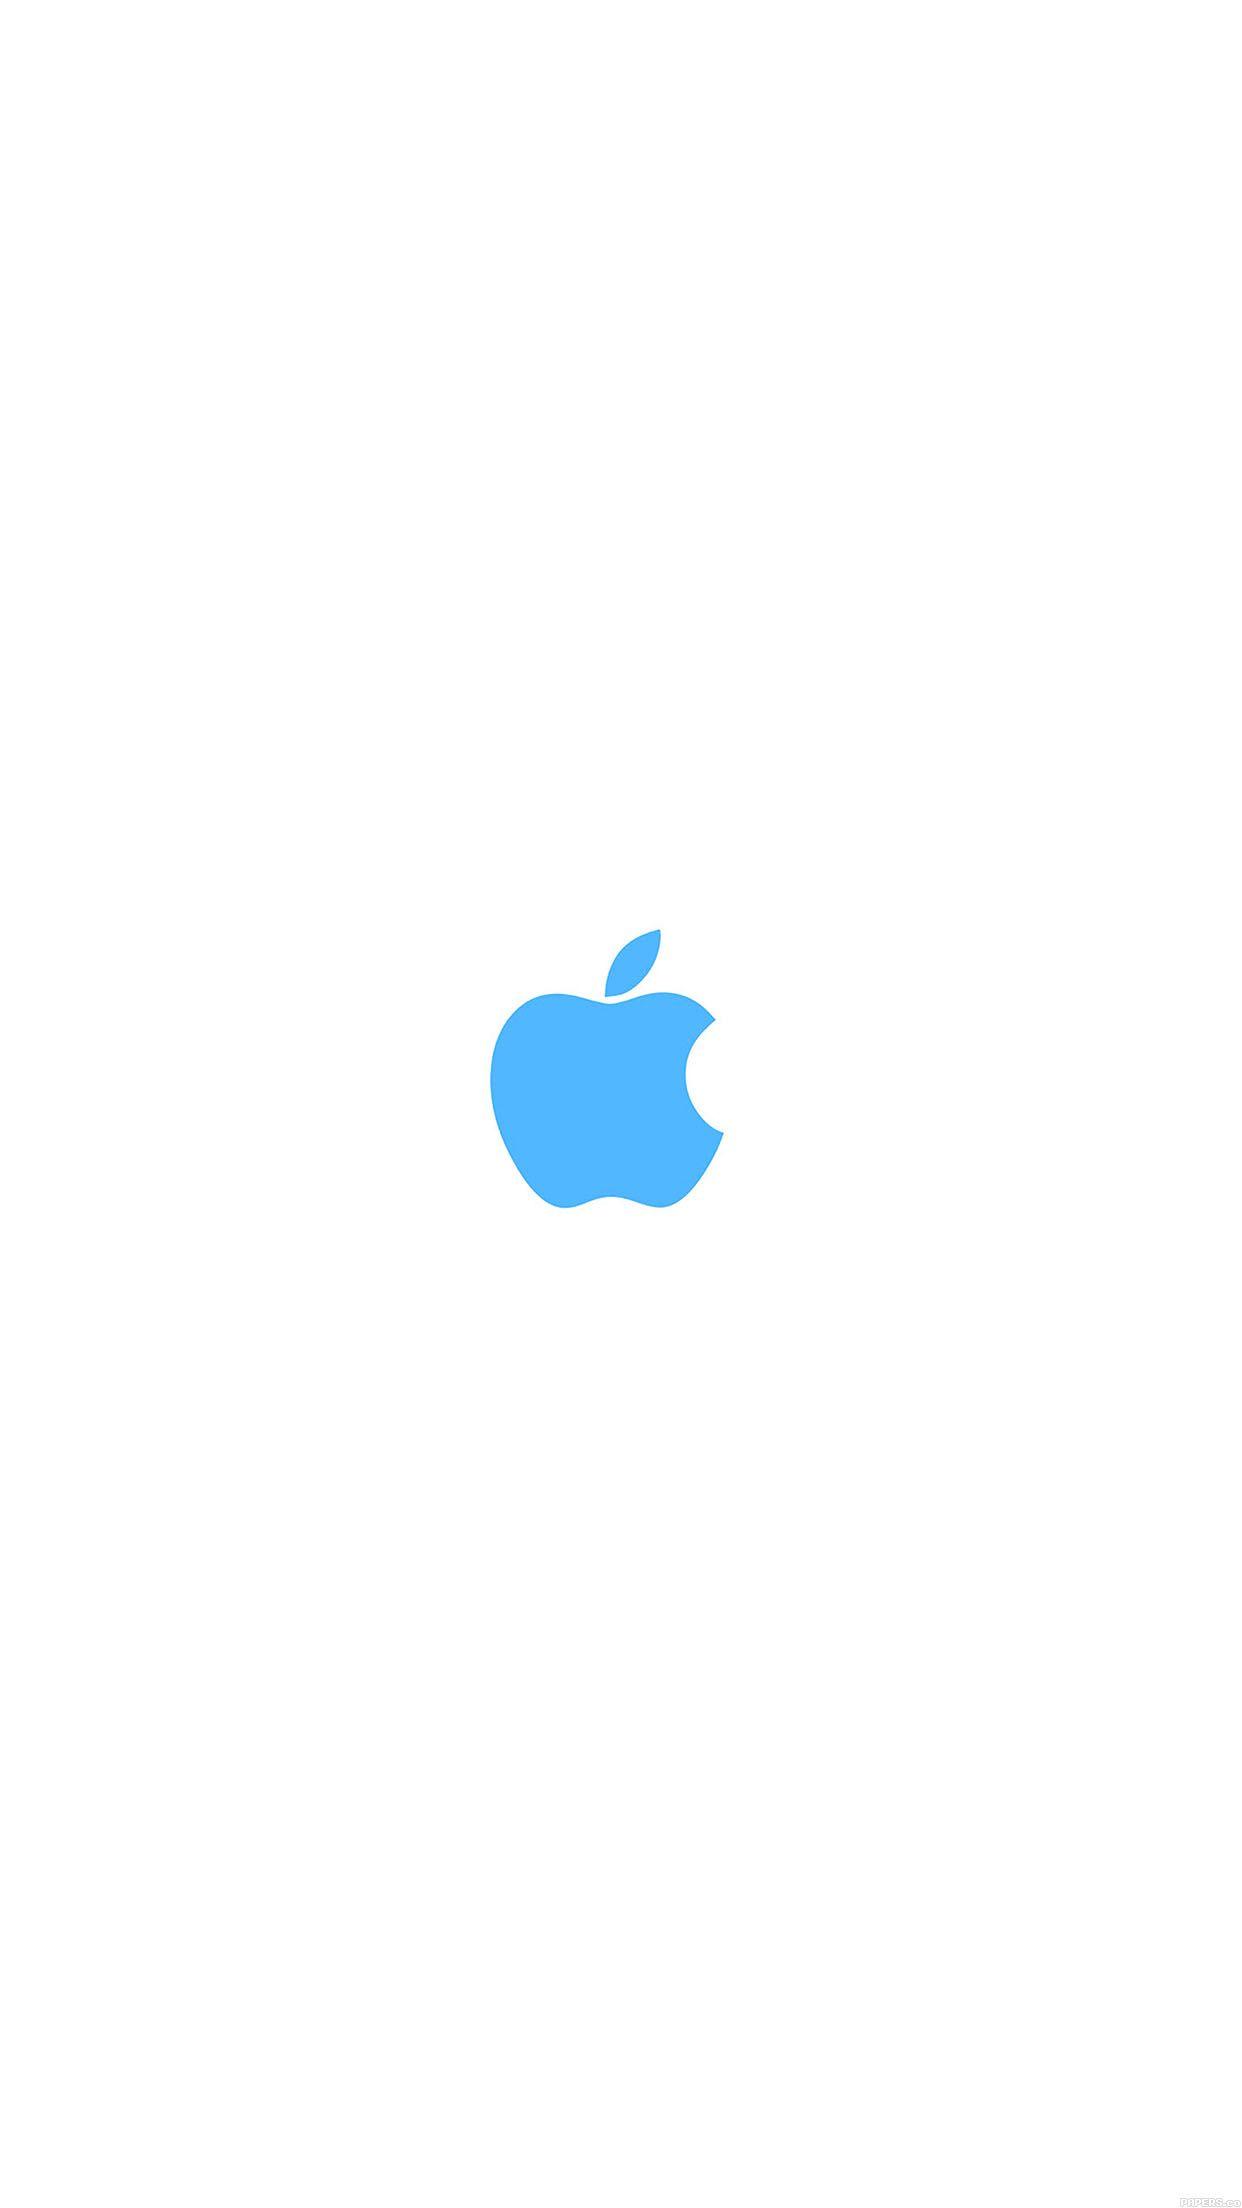 Apple Logo Pink iPhone Wallpaper image. Apple Fever!